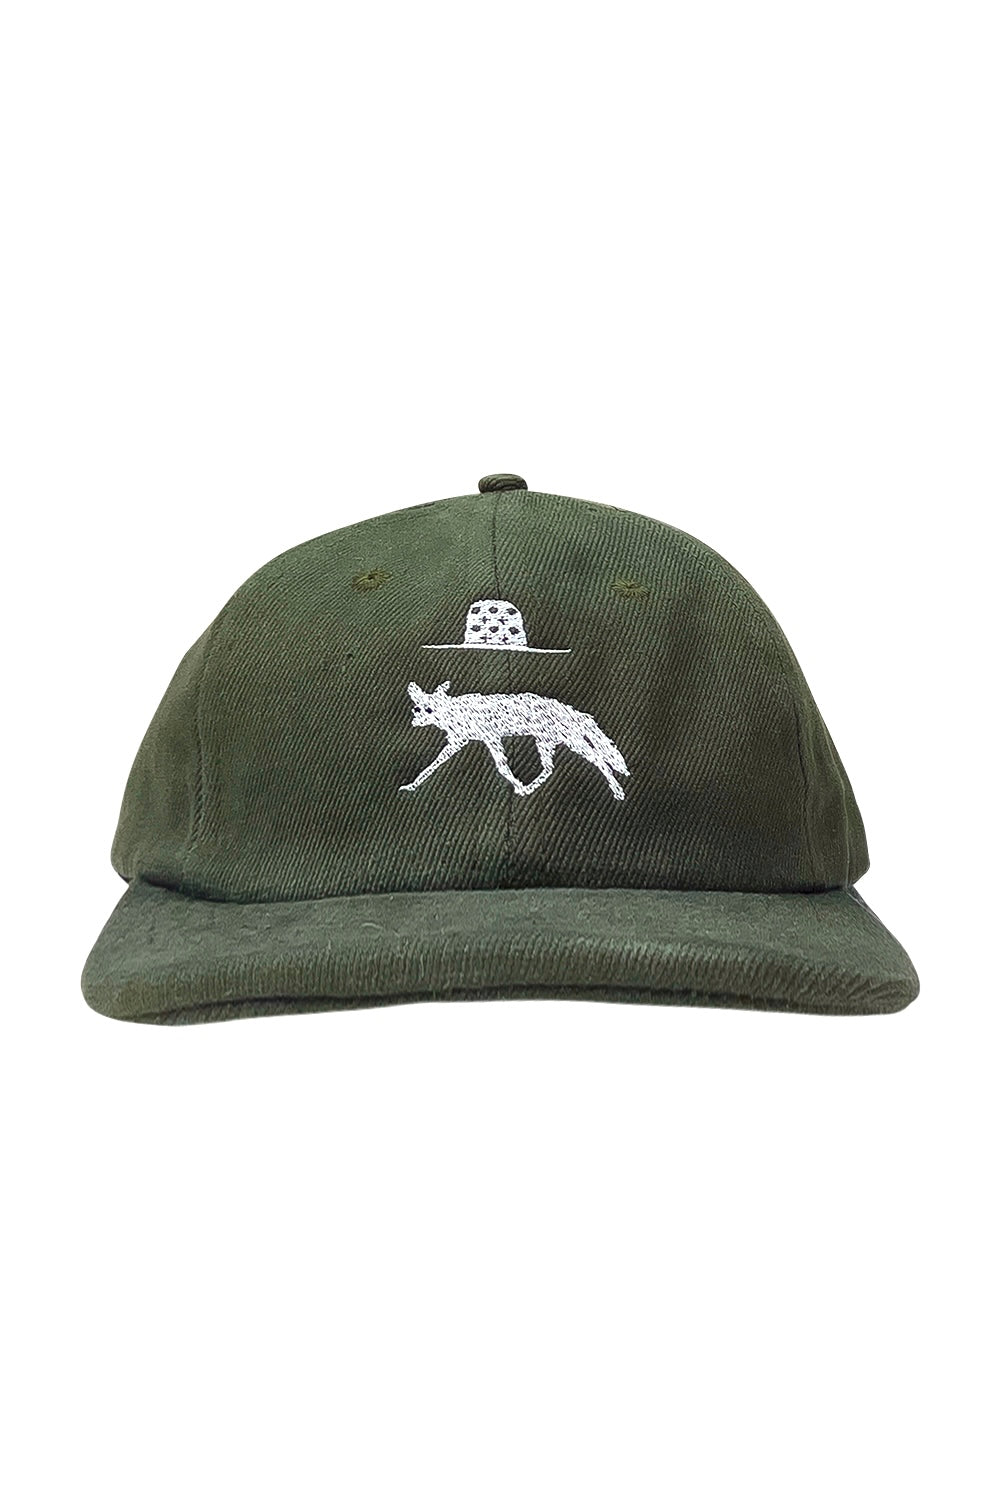 Coyote Twill Cap | Jungmaven Hemp Clothing & Accessories / Color: Olive Green